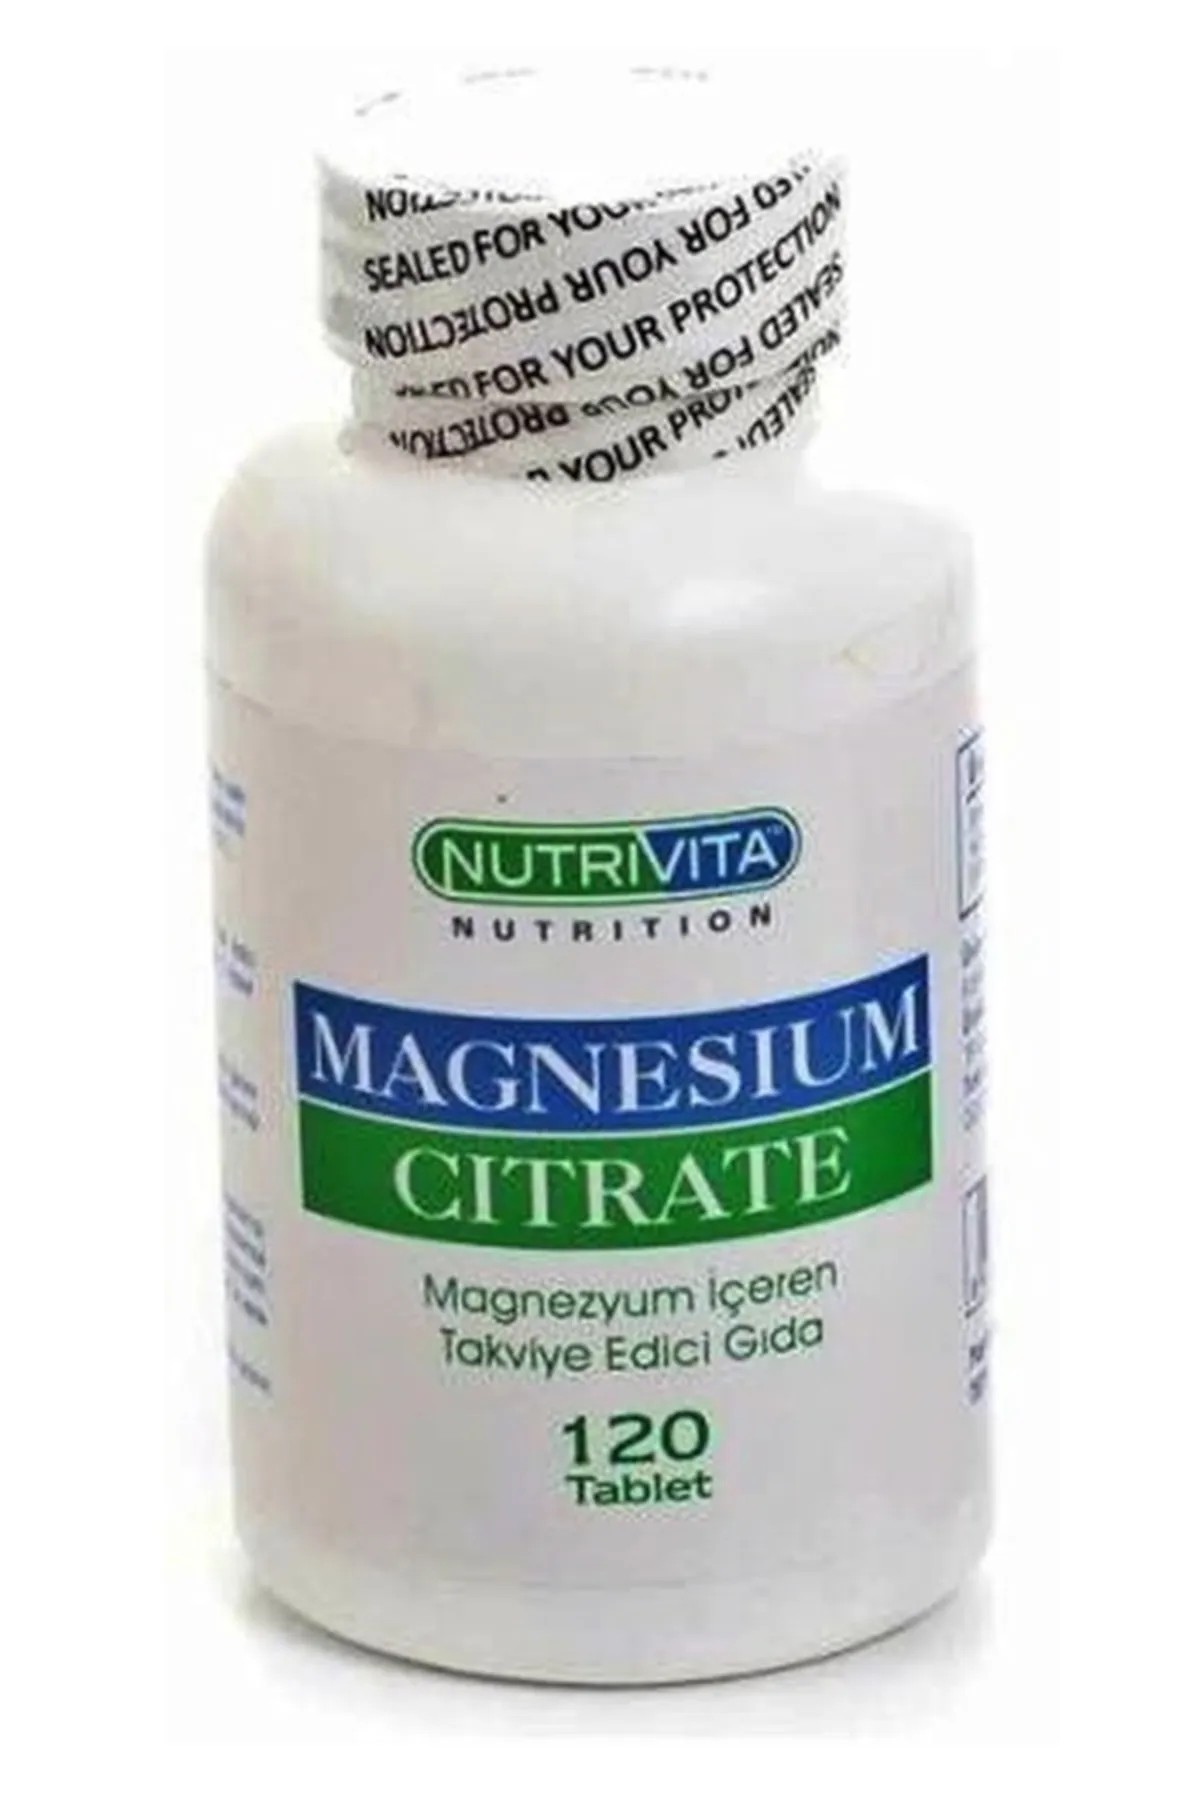 Nutrivita Magnesium Citrate 120 tablet